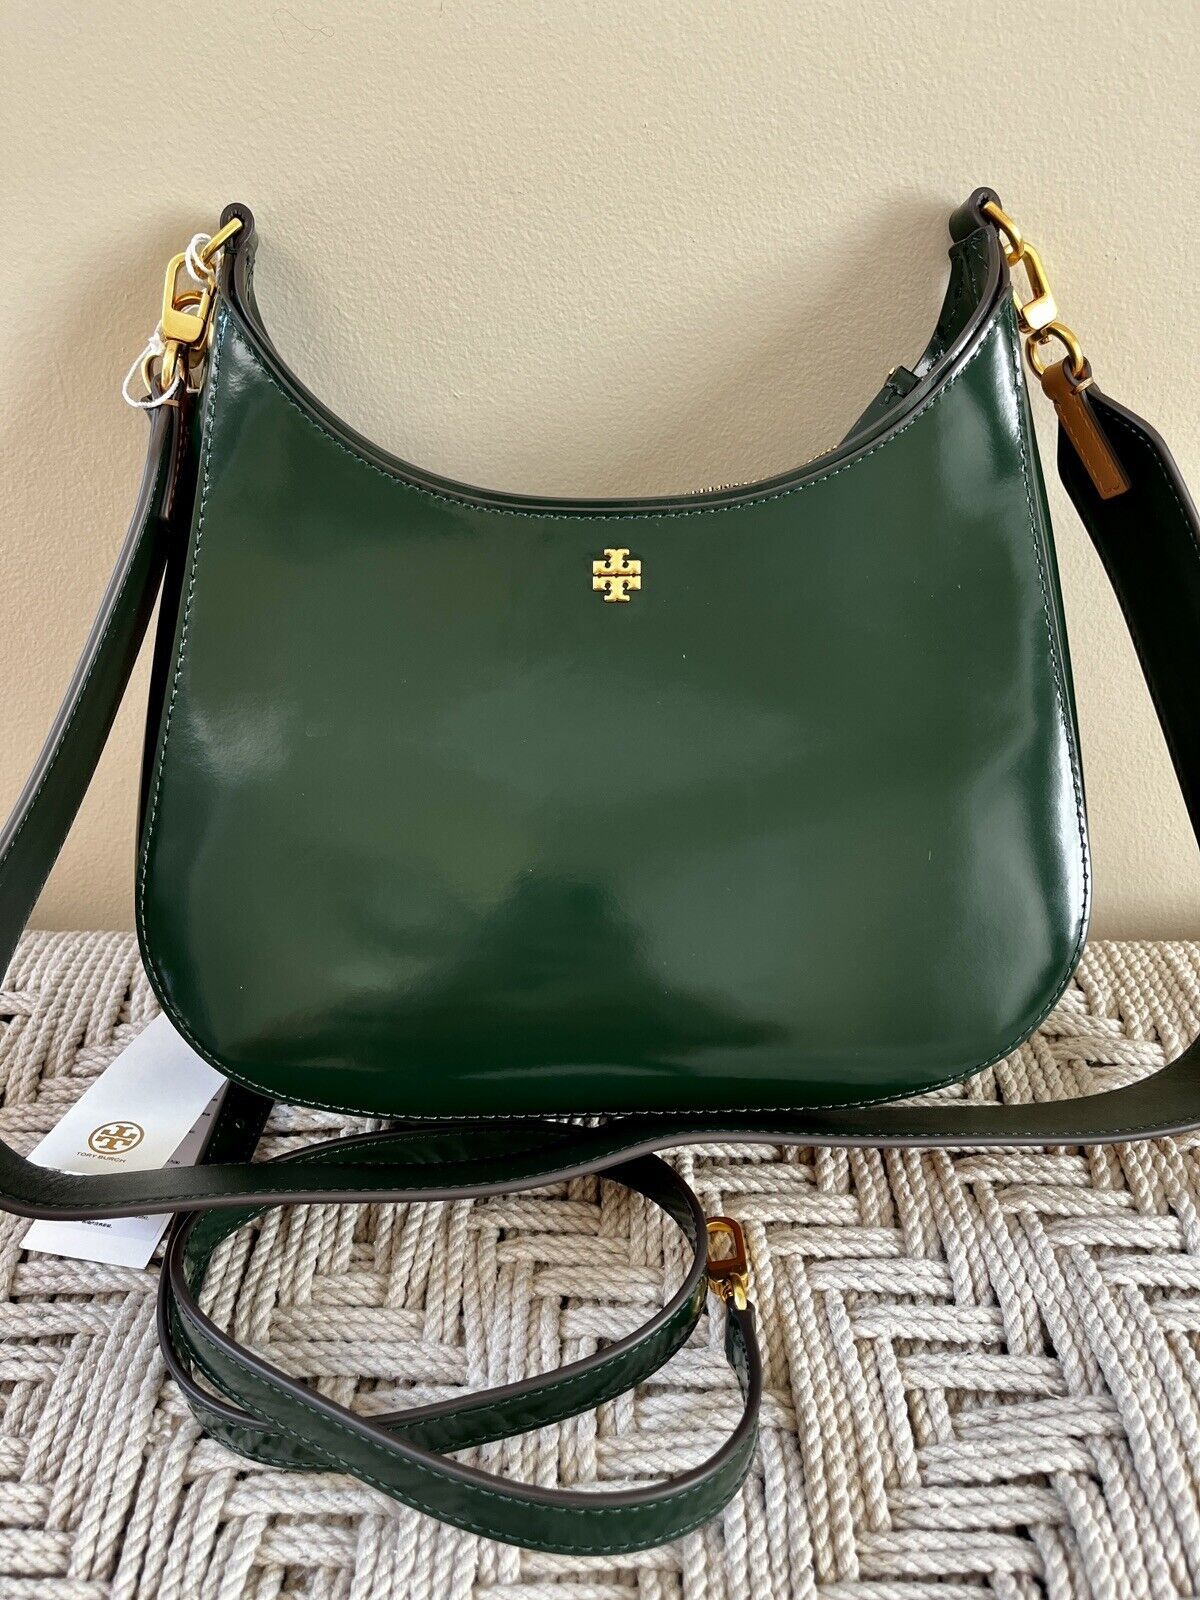 Tory Burch Handbag Emerson Swingpack Patent Pine Green Leather Bag Purse Nwt New